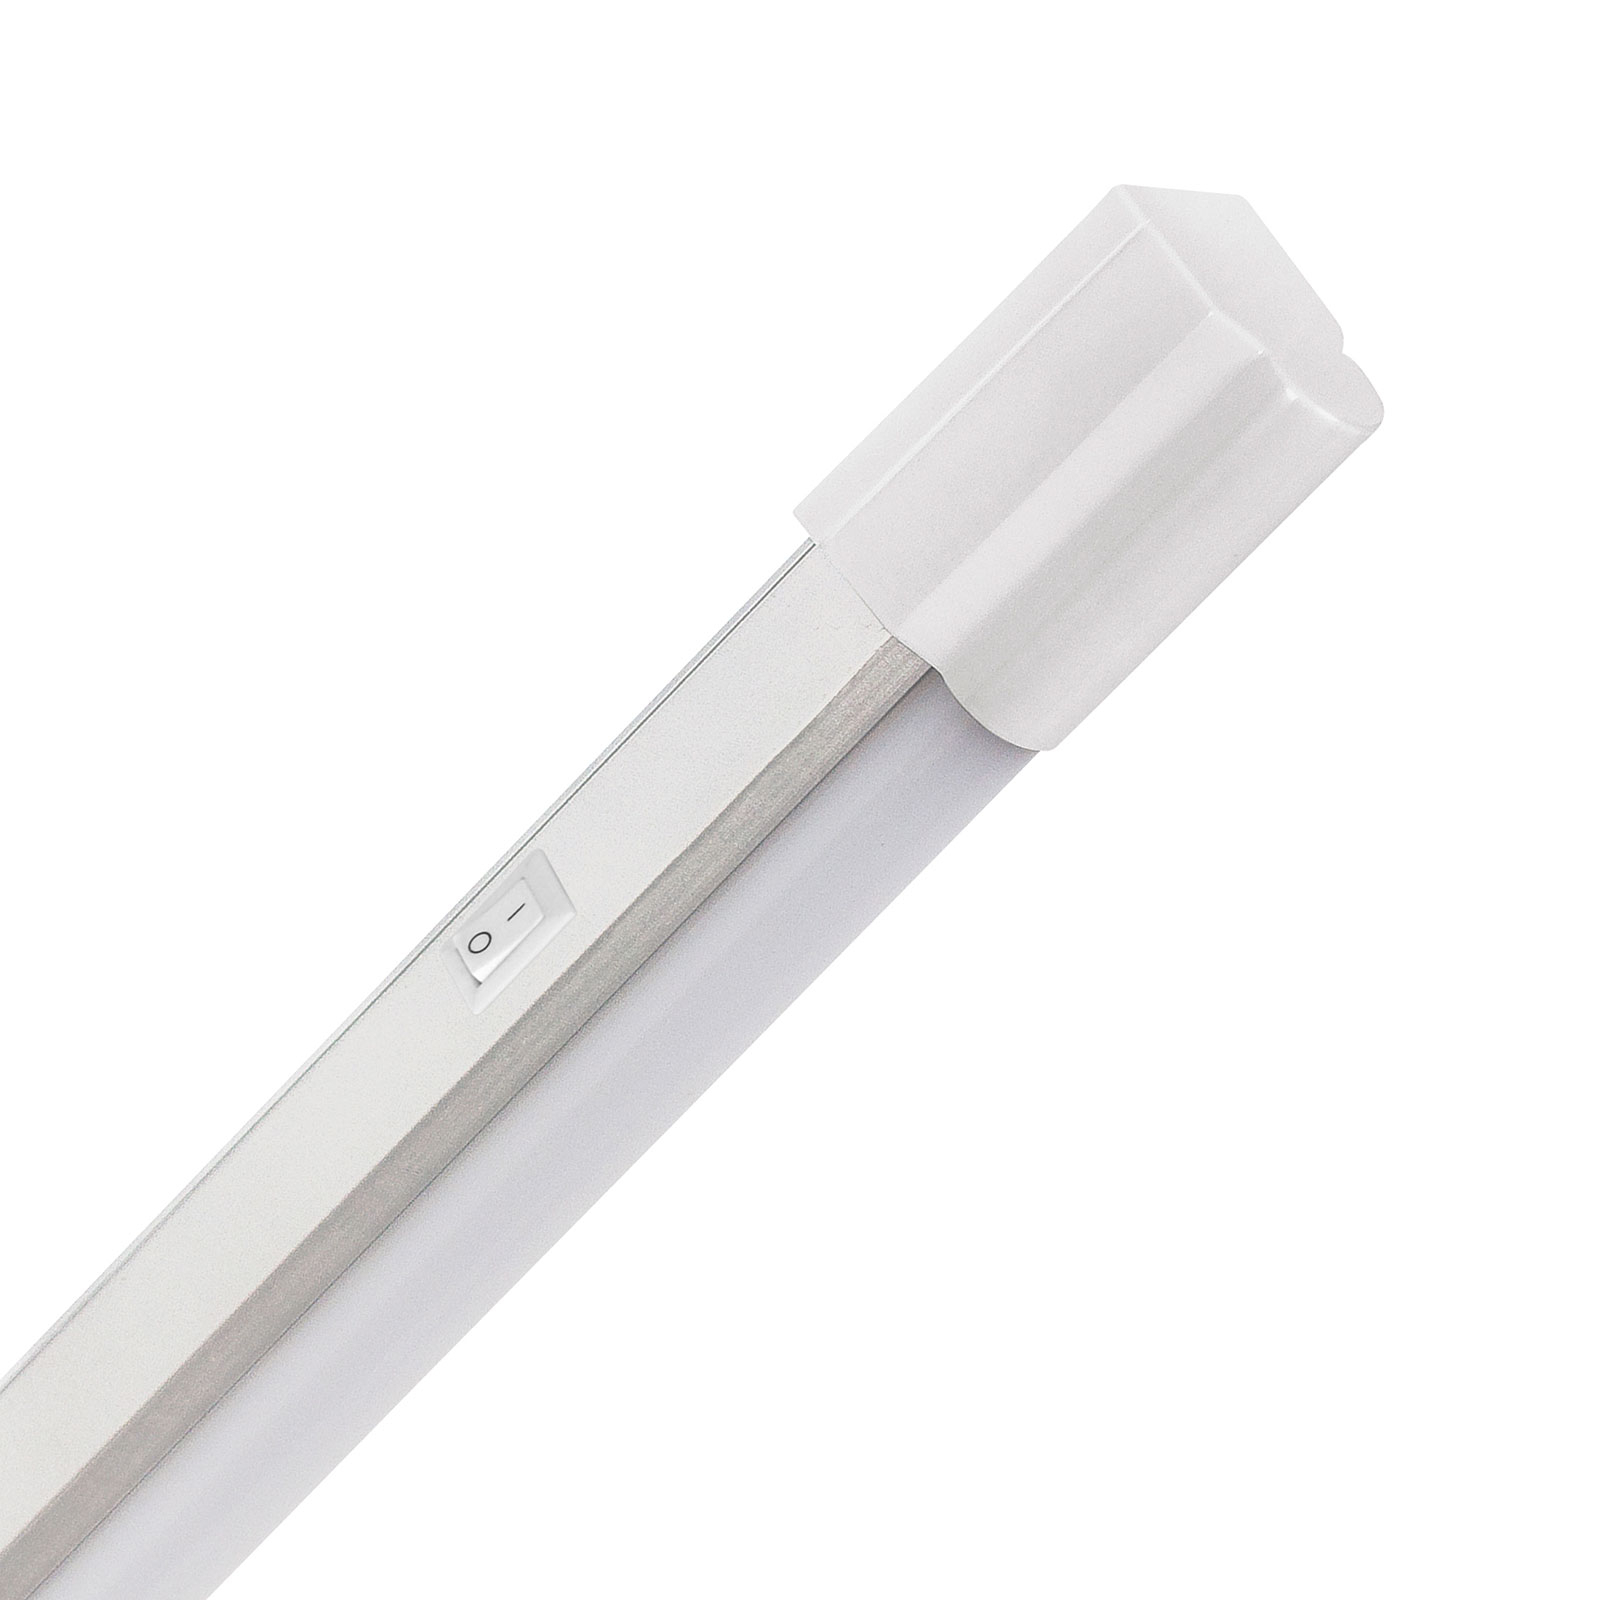 LED-kaapinalusvalaisin Arax 160, 159,1 cm, 19 W